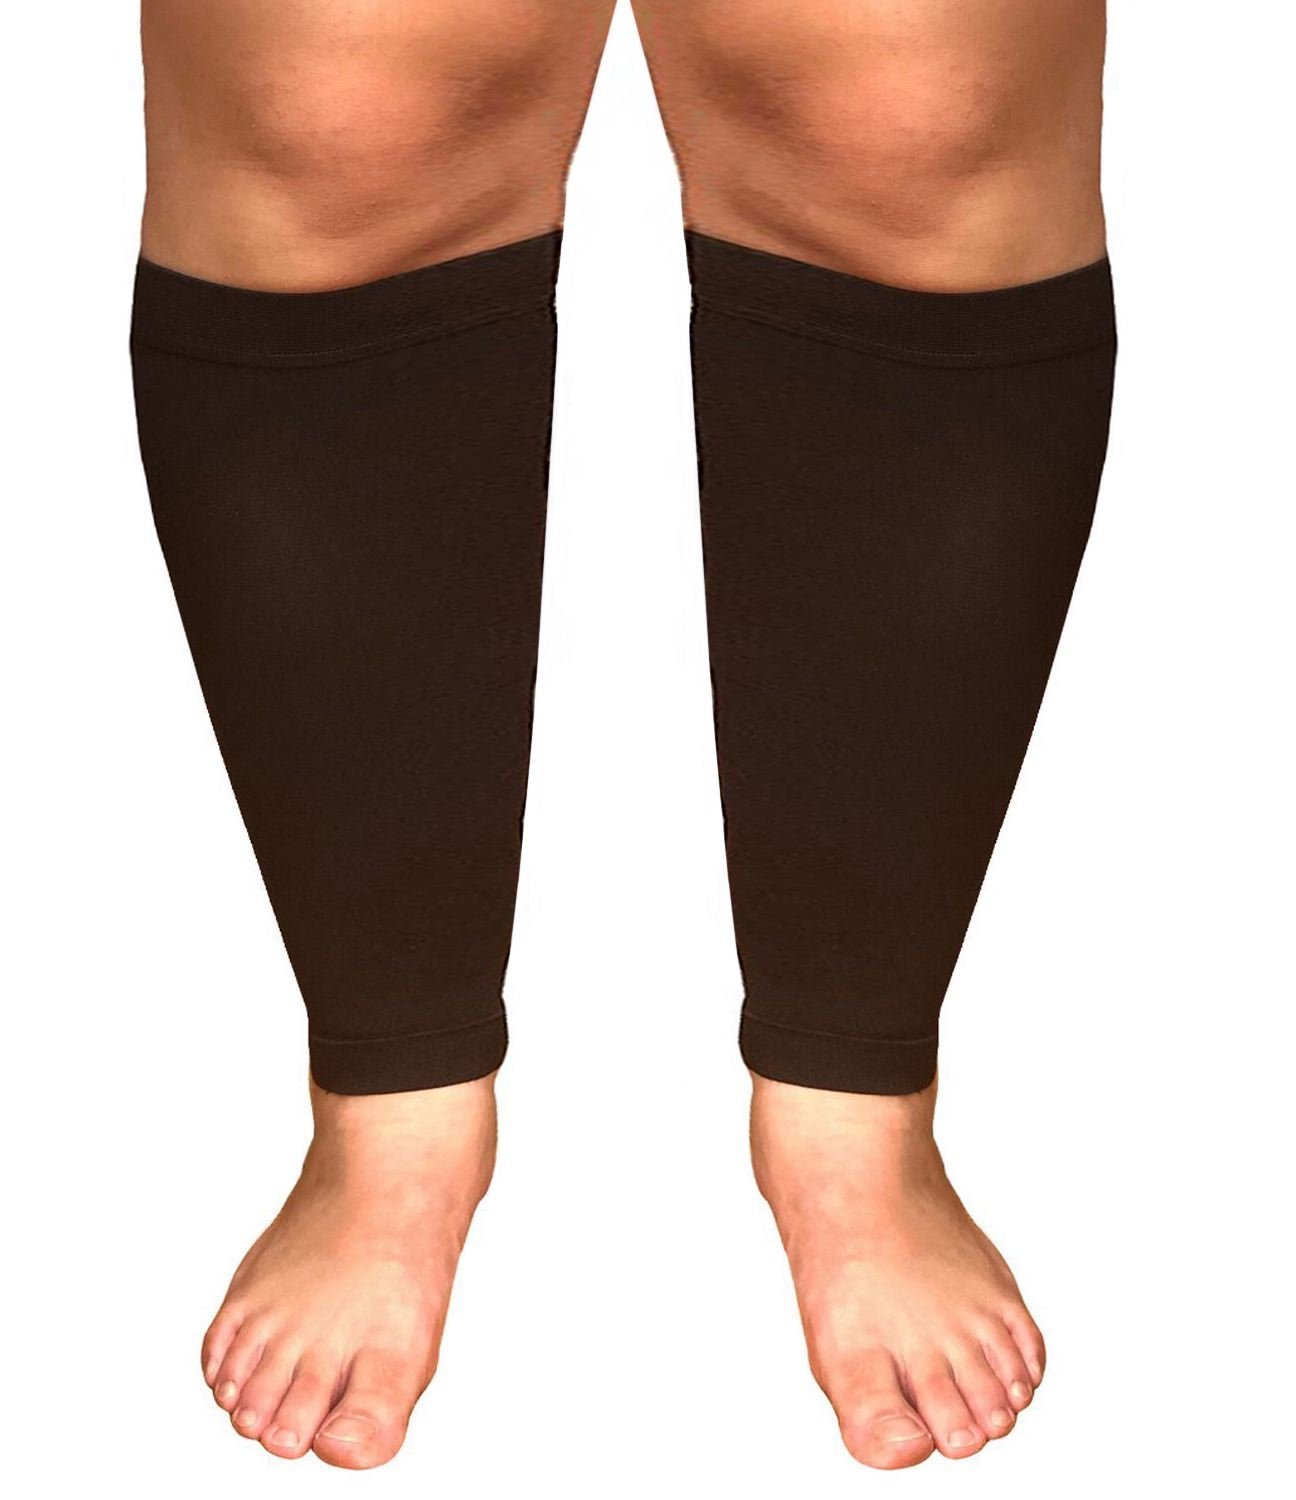 Runee Extra Wide Calf Compression Sleeve - Leg Support For Wide Calves, Compression  Sleeve For Calf Pain & Shin Splint, Relief Swelling, Varicose Veins, DVT  (Black)